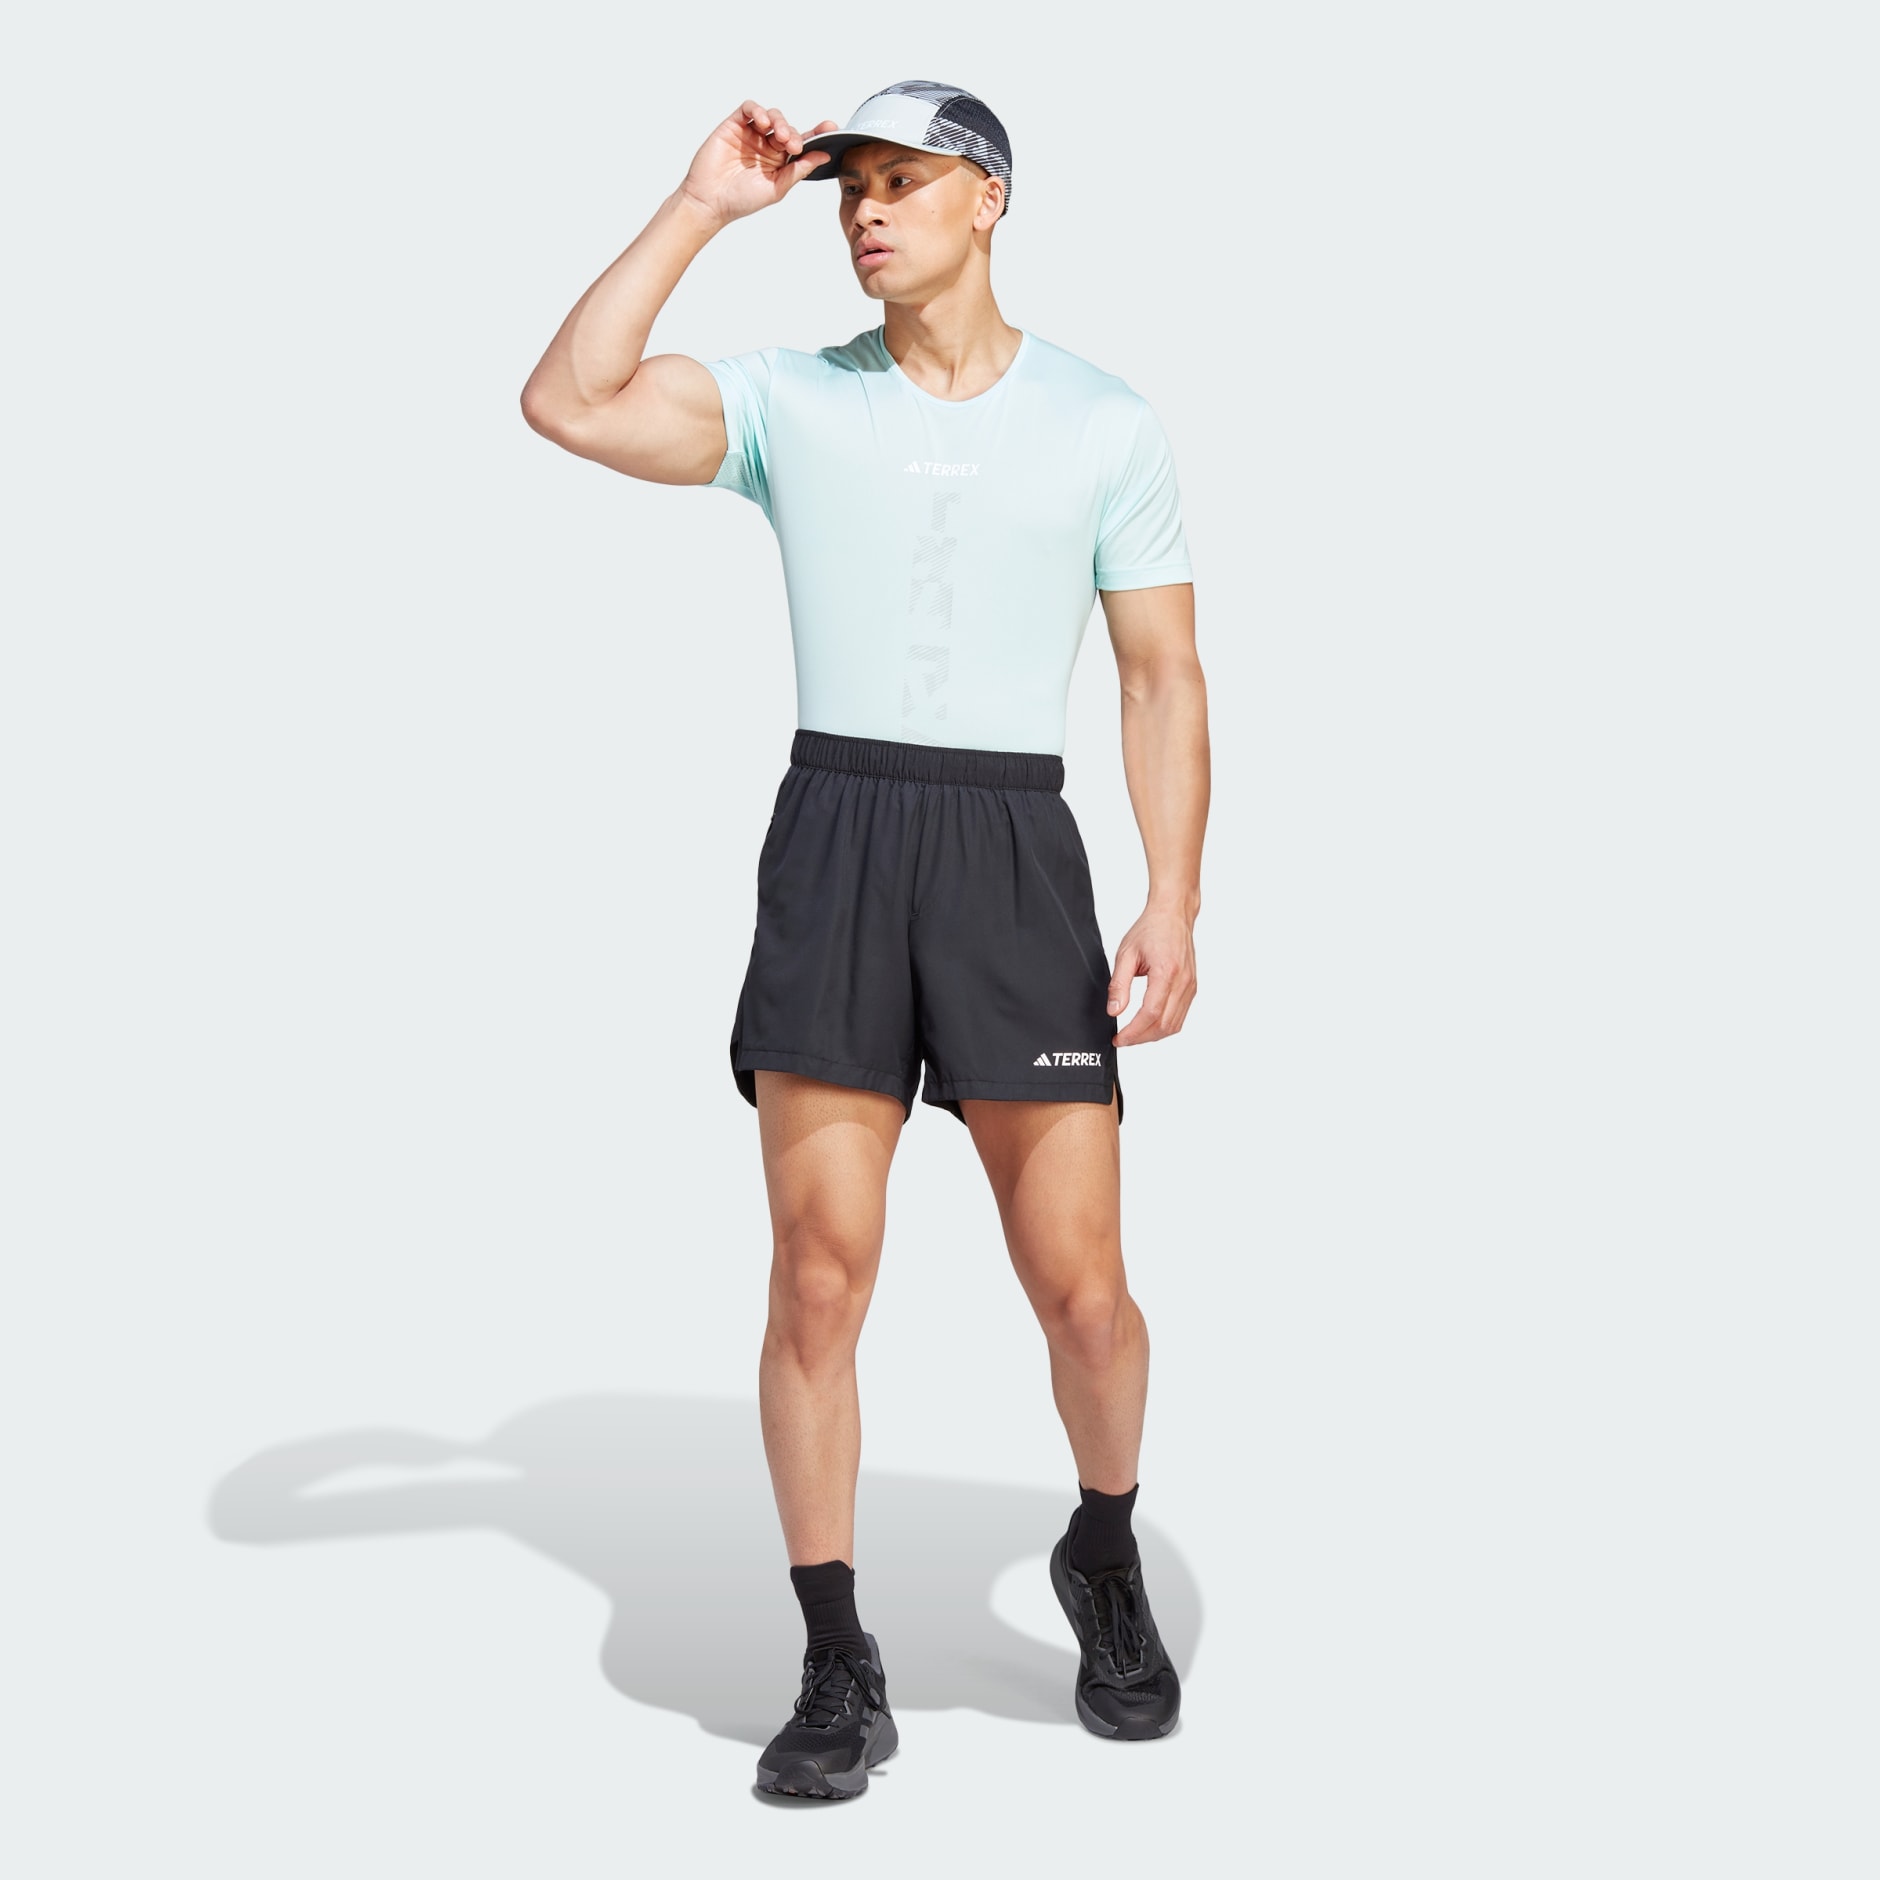 Gymshark Arrival 5 Shorts - Black  Running shorts outfit, Mens pants  fashion, Gymshark